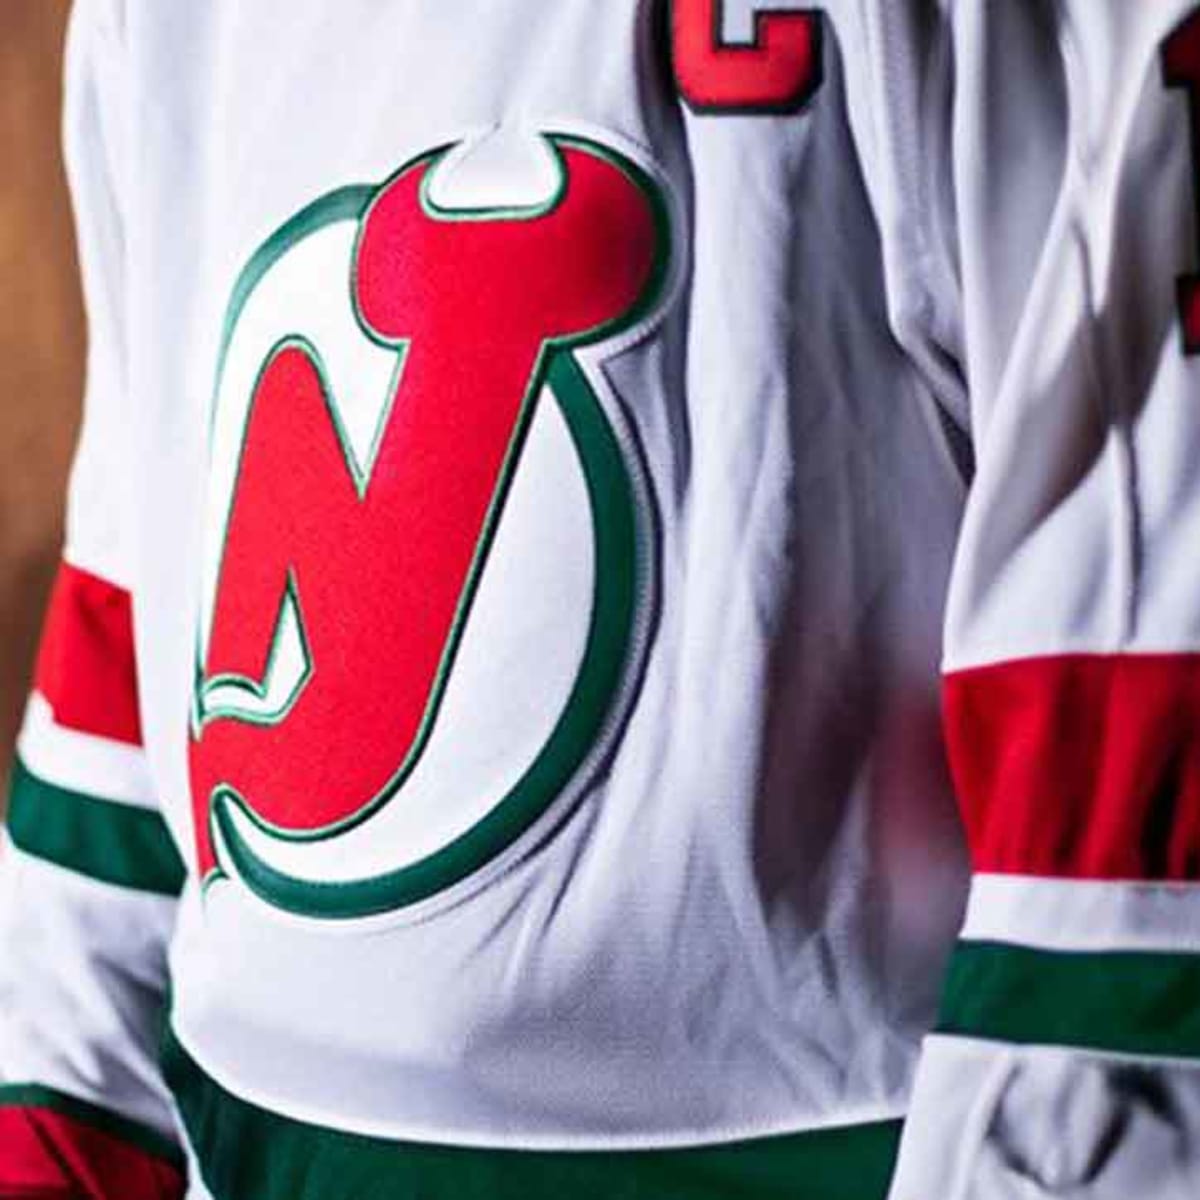 New Jersey Devils Unveil New Heritage Uniform for 2018-19